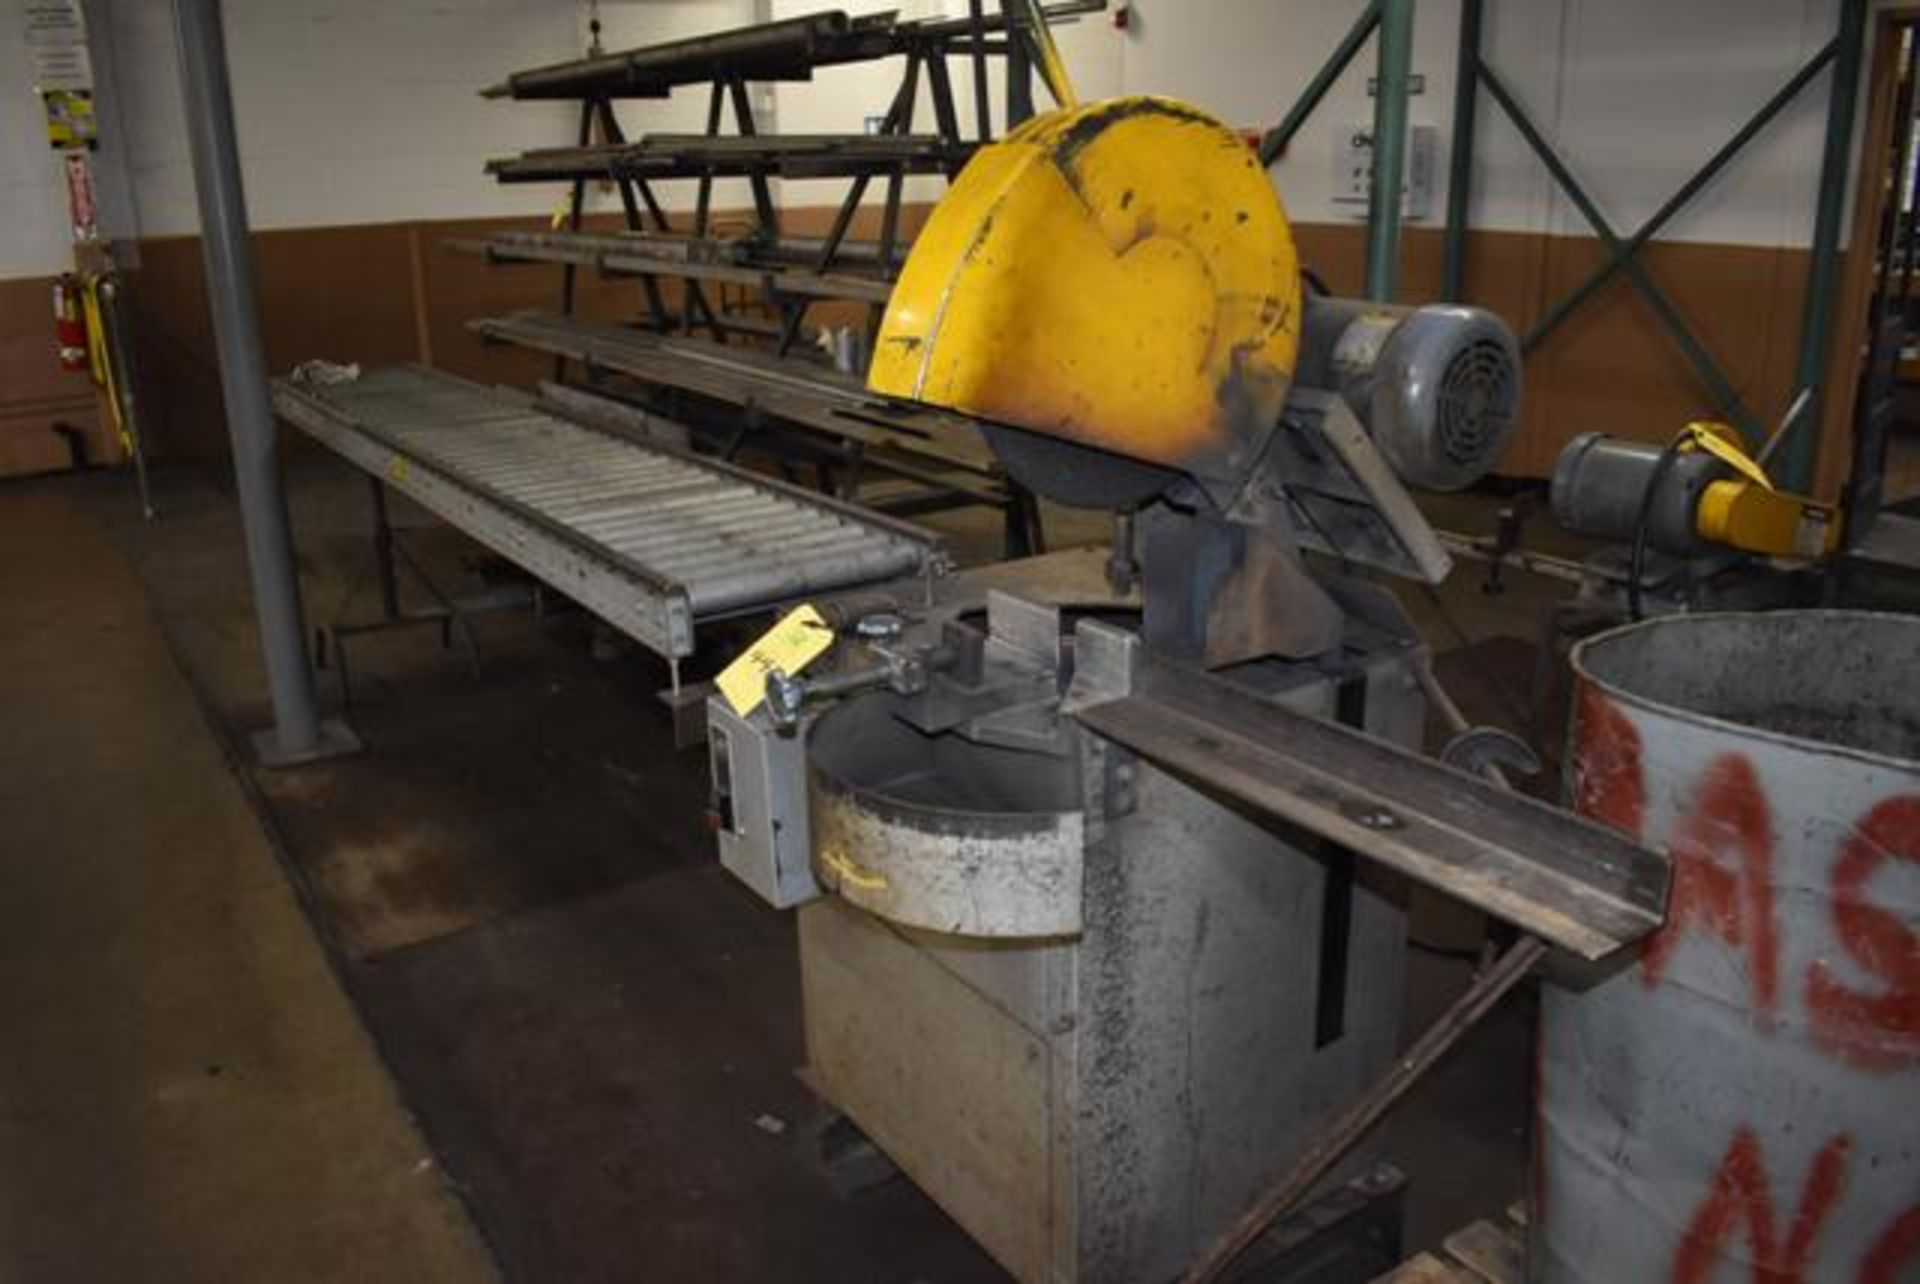 Everett Model #16 Abrasive Cut-Off Saw, Includes Roller Conveyor, Loading Fee: $200